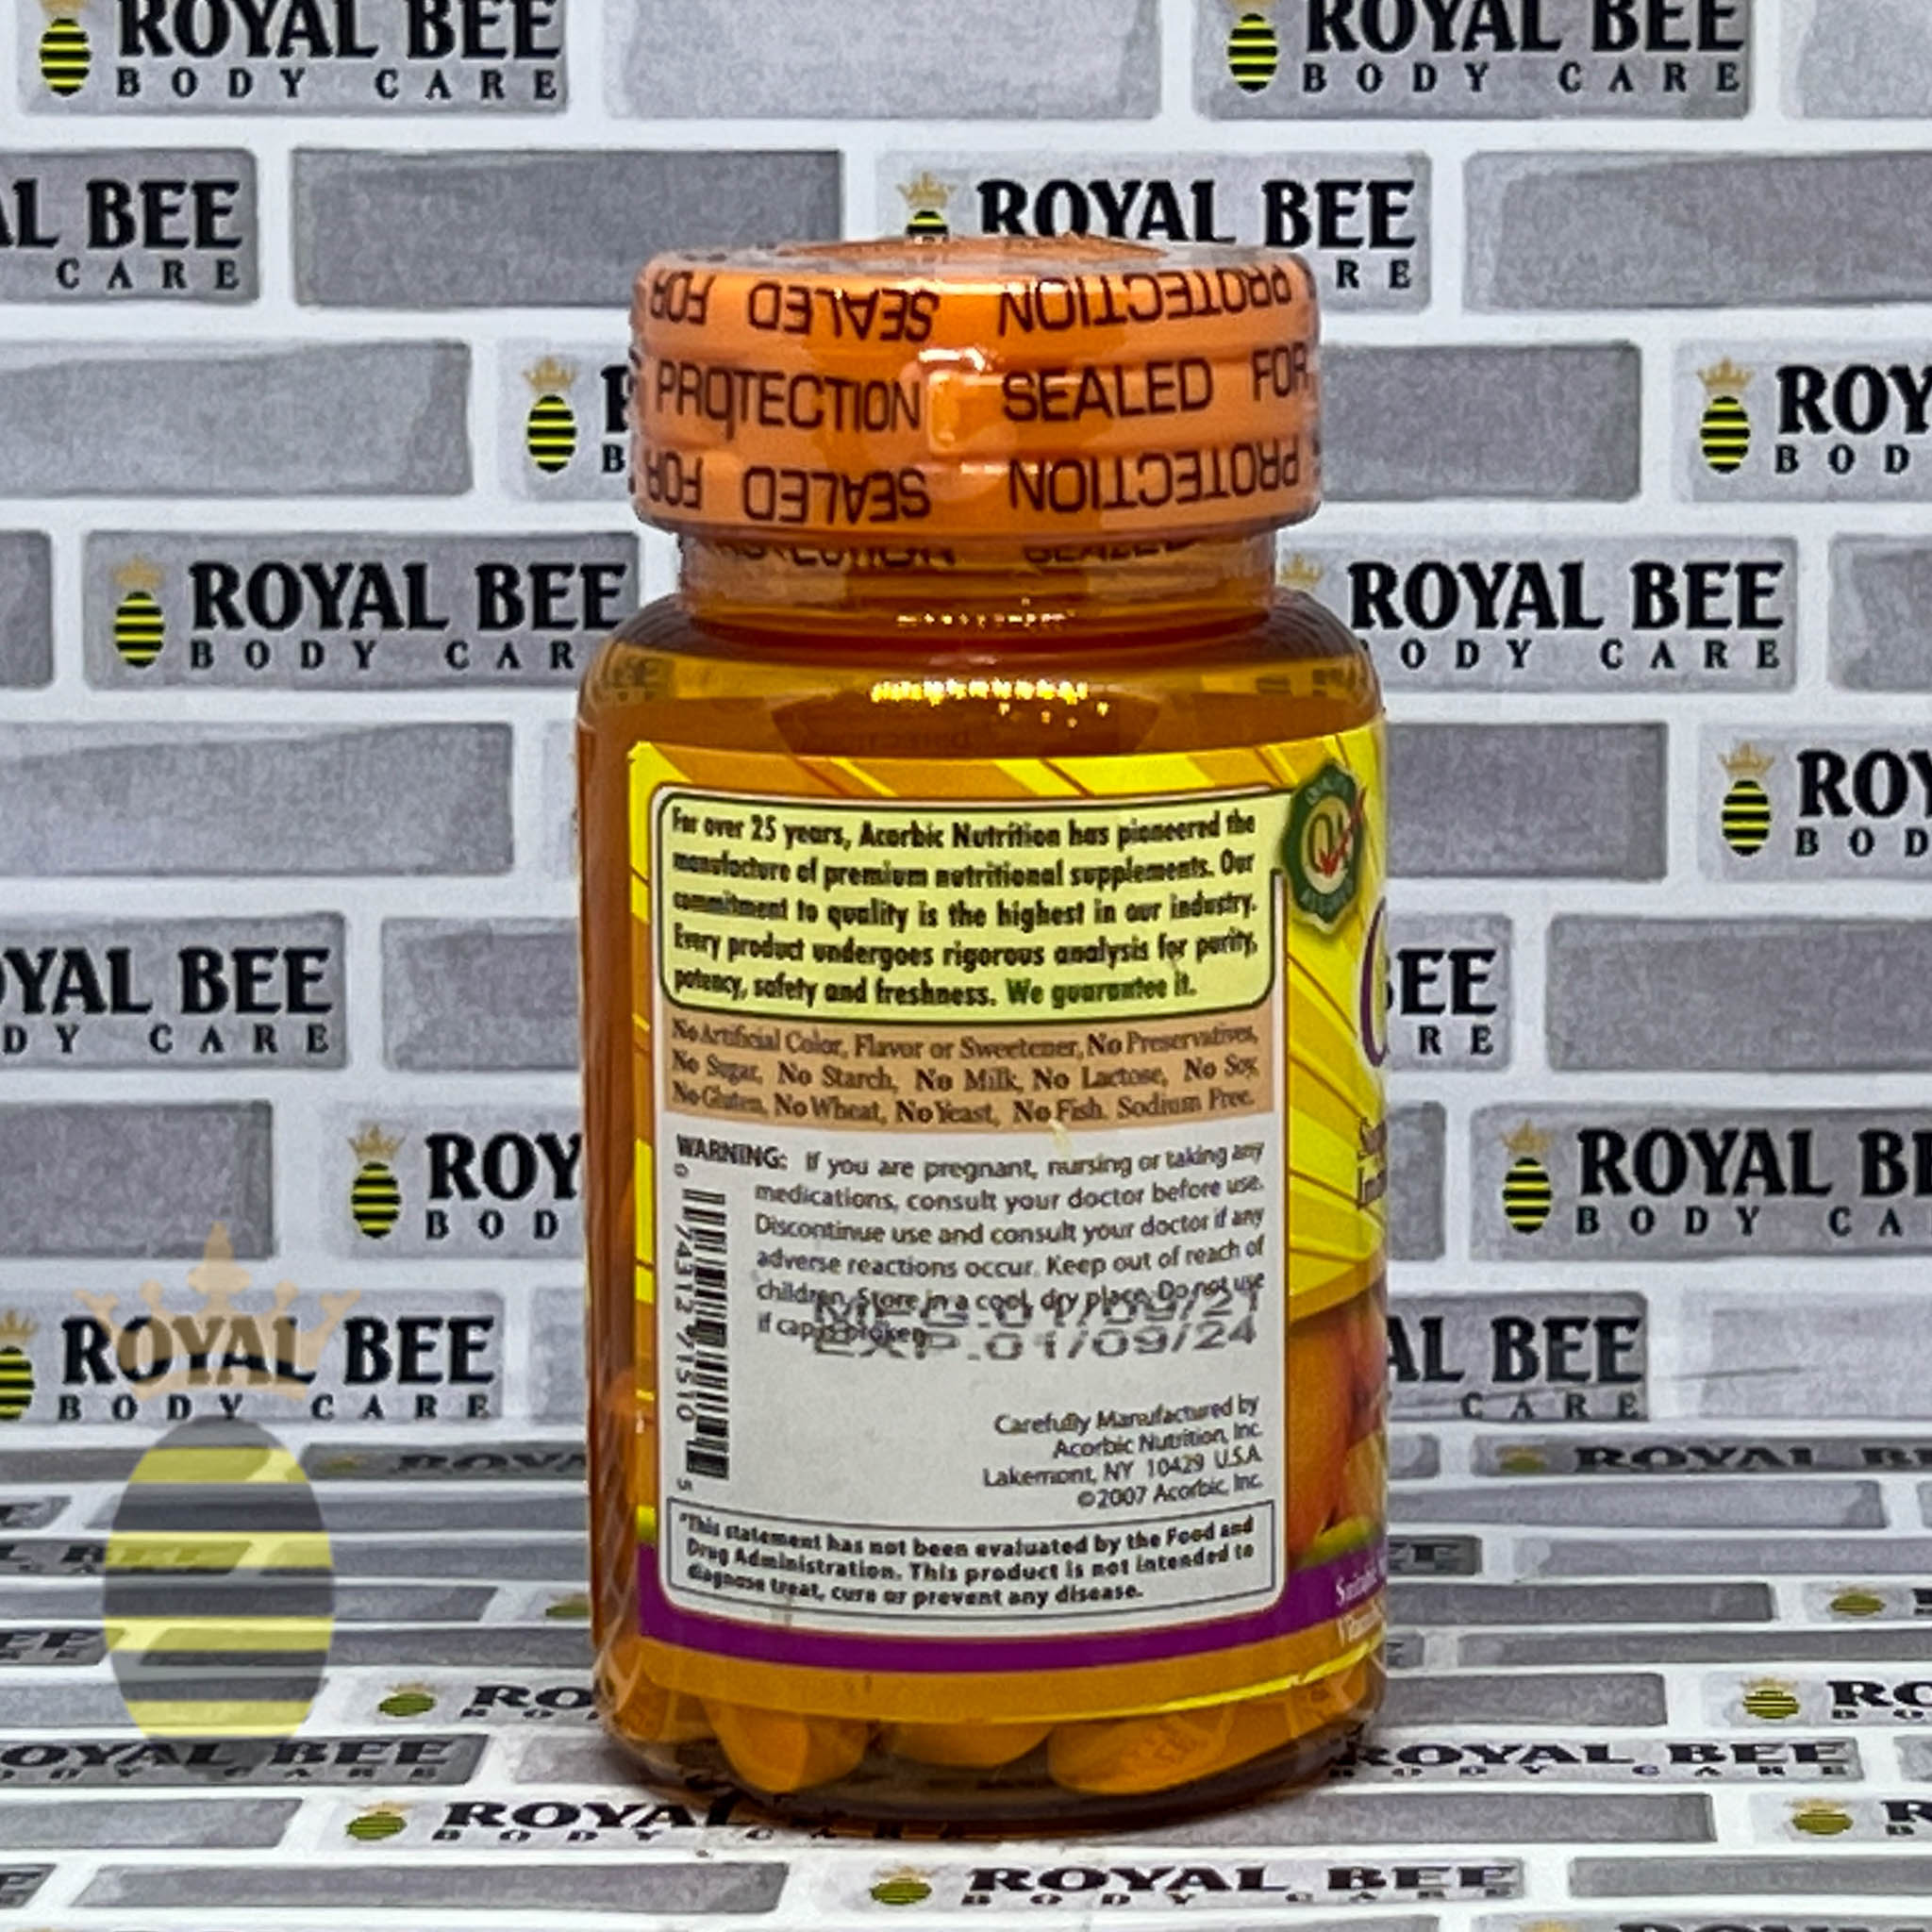 Royal Bee, Inc